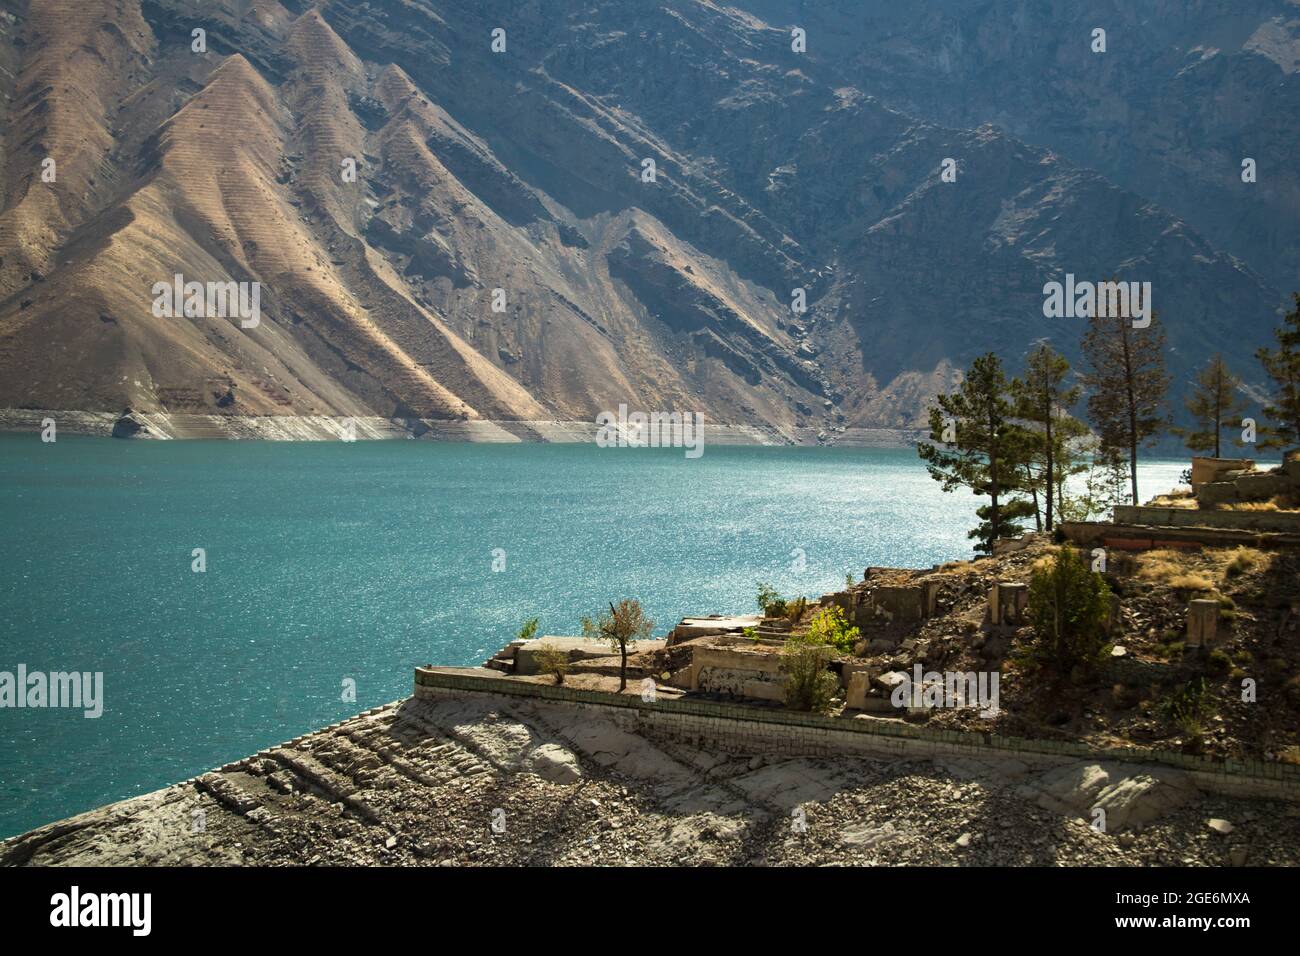 A beautiful view of Karaj Dam on Chalous Road Stock Photo